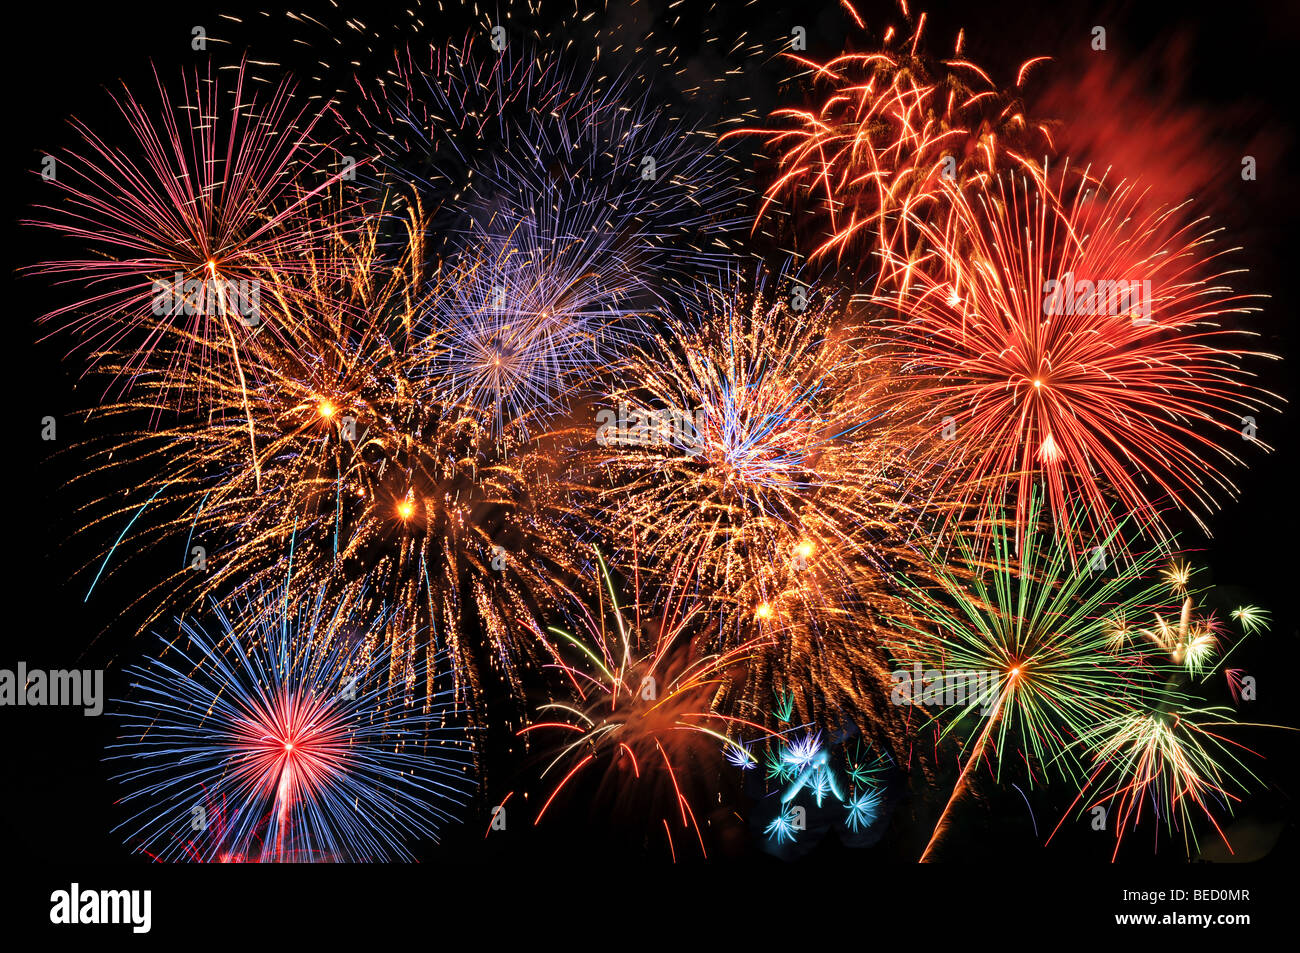 Colorful fireworks lighting the night sky Stock Photo